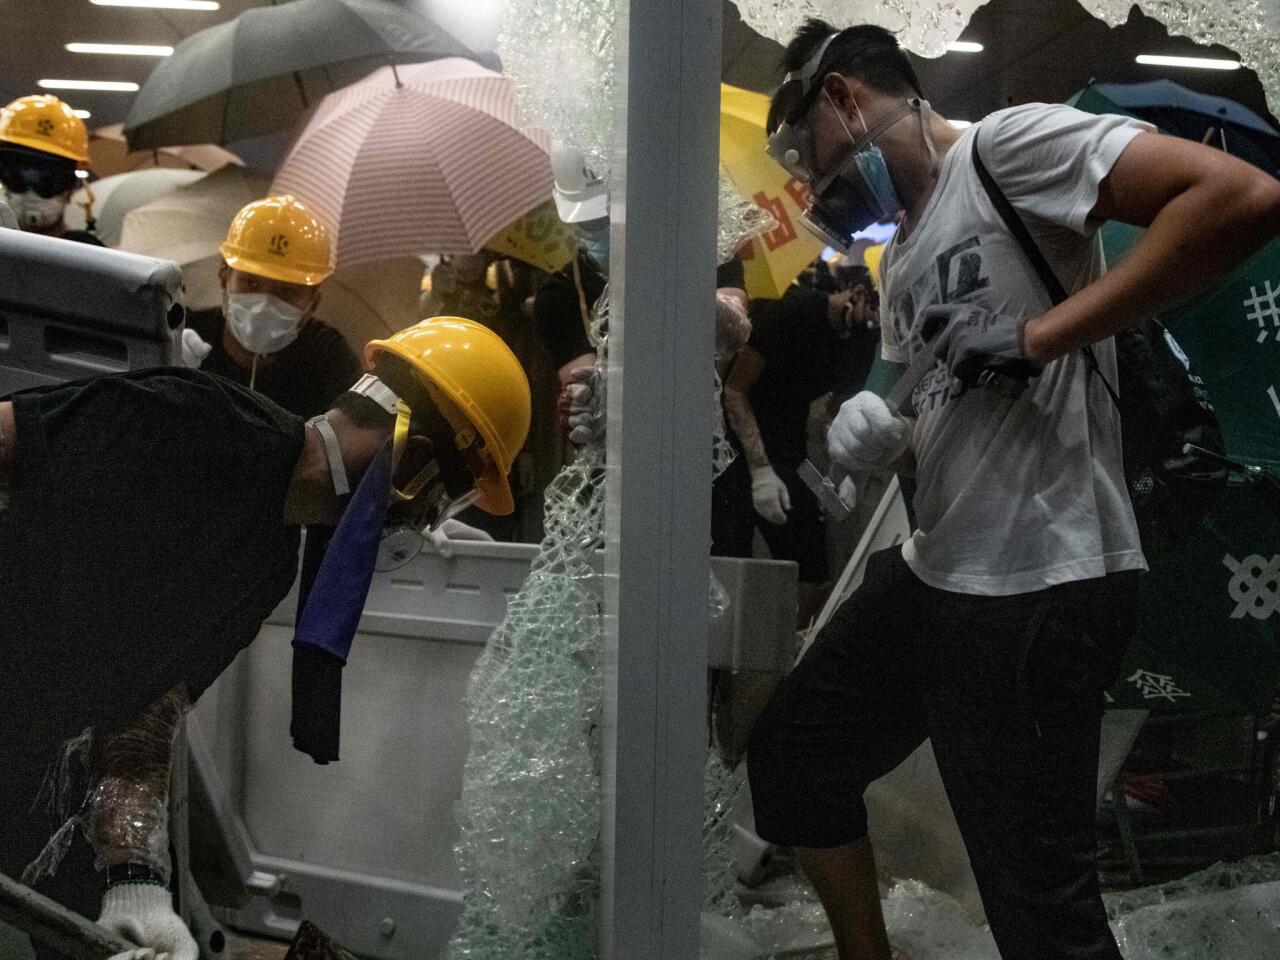 Protests in Hong Kong turn violent